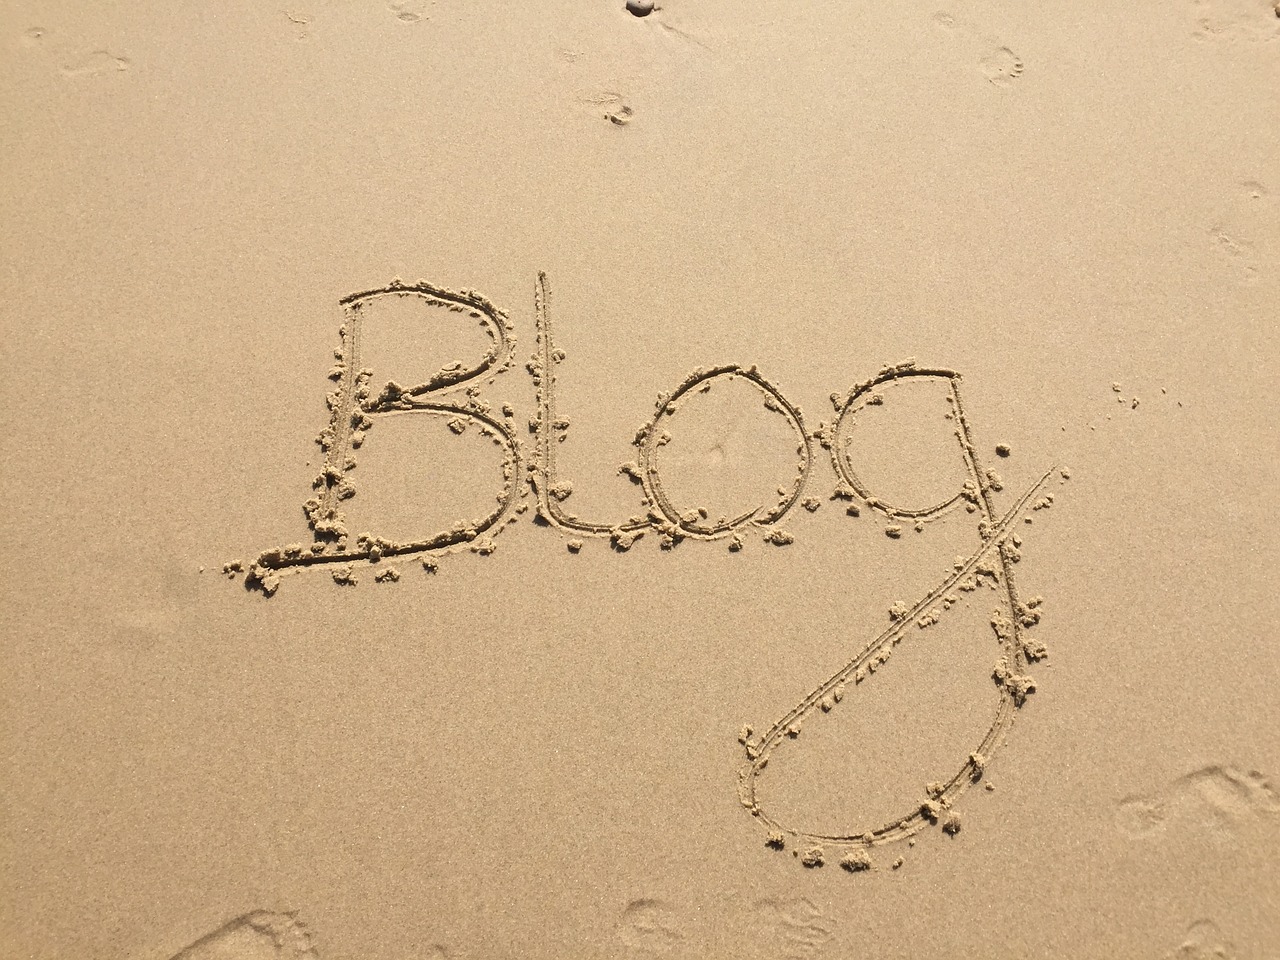 blog blogger blogging free photo